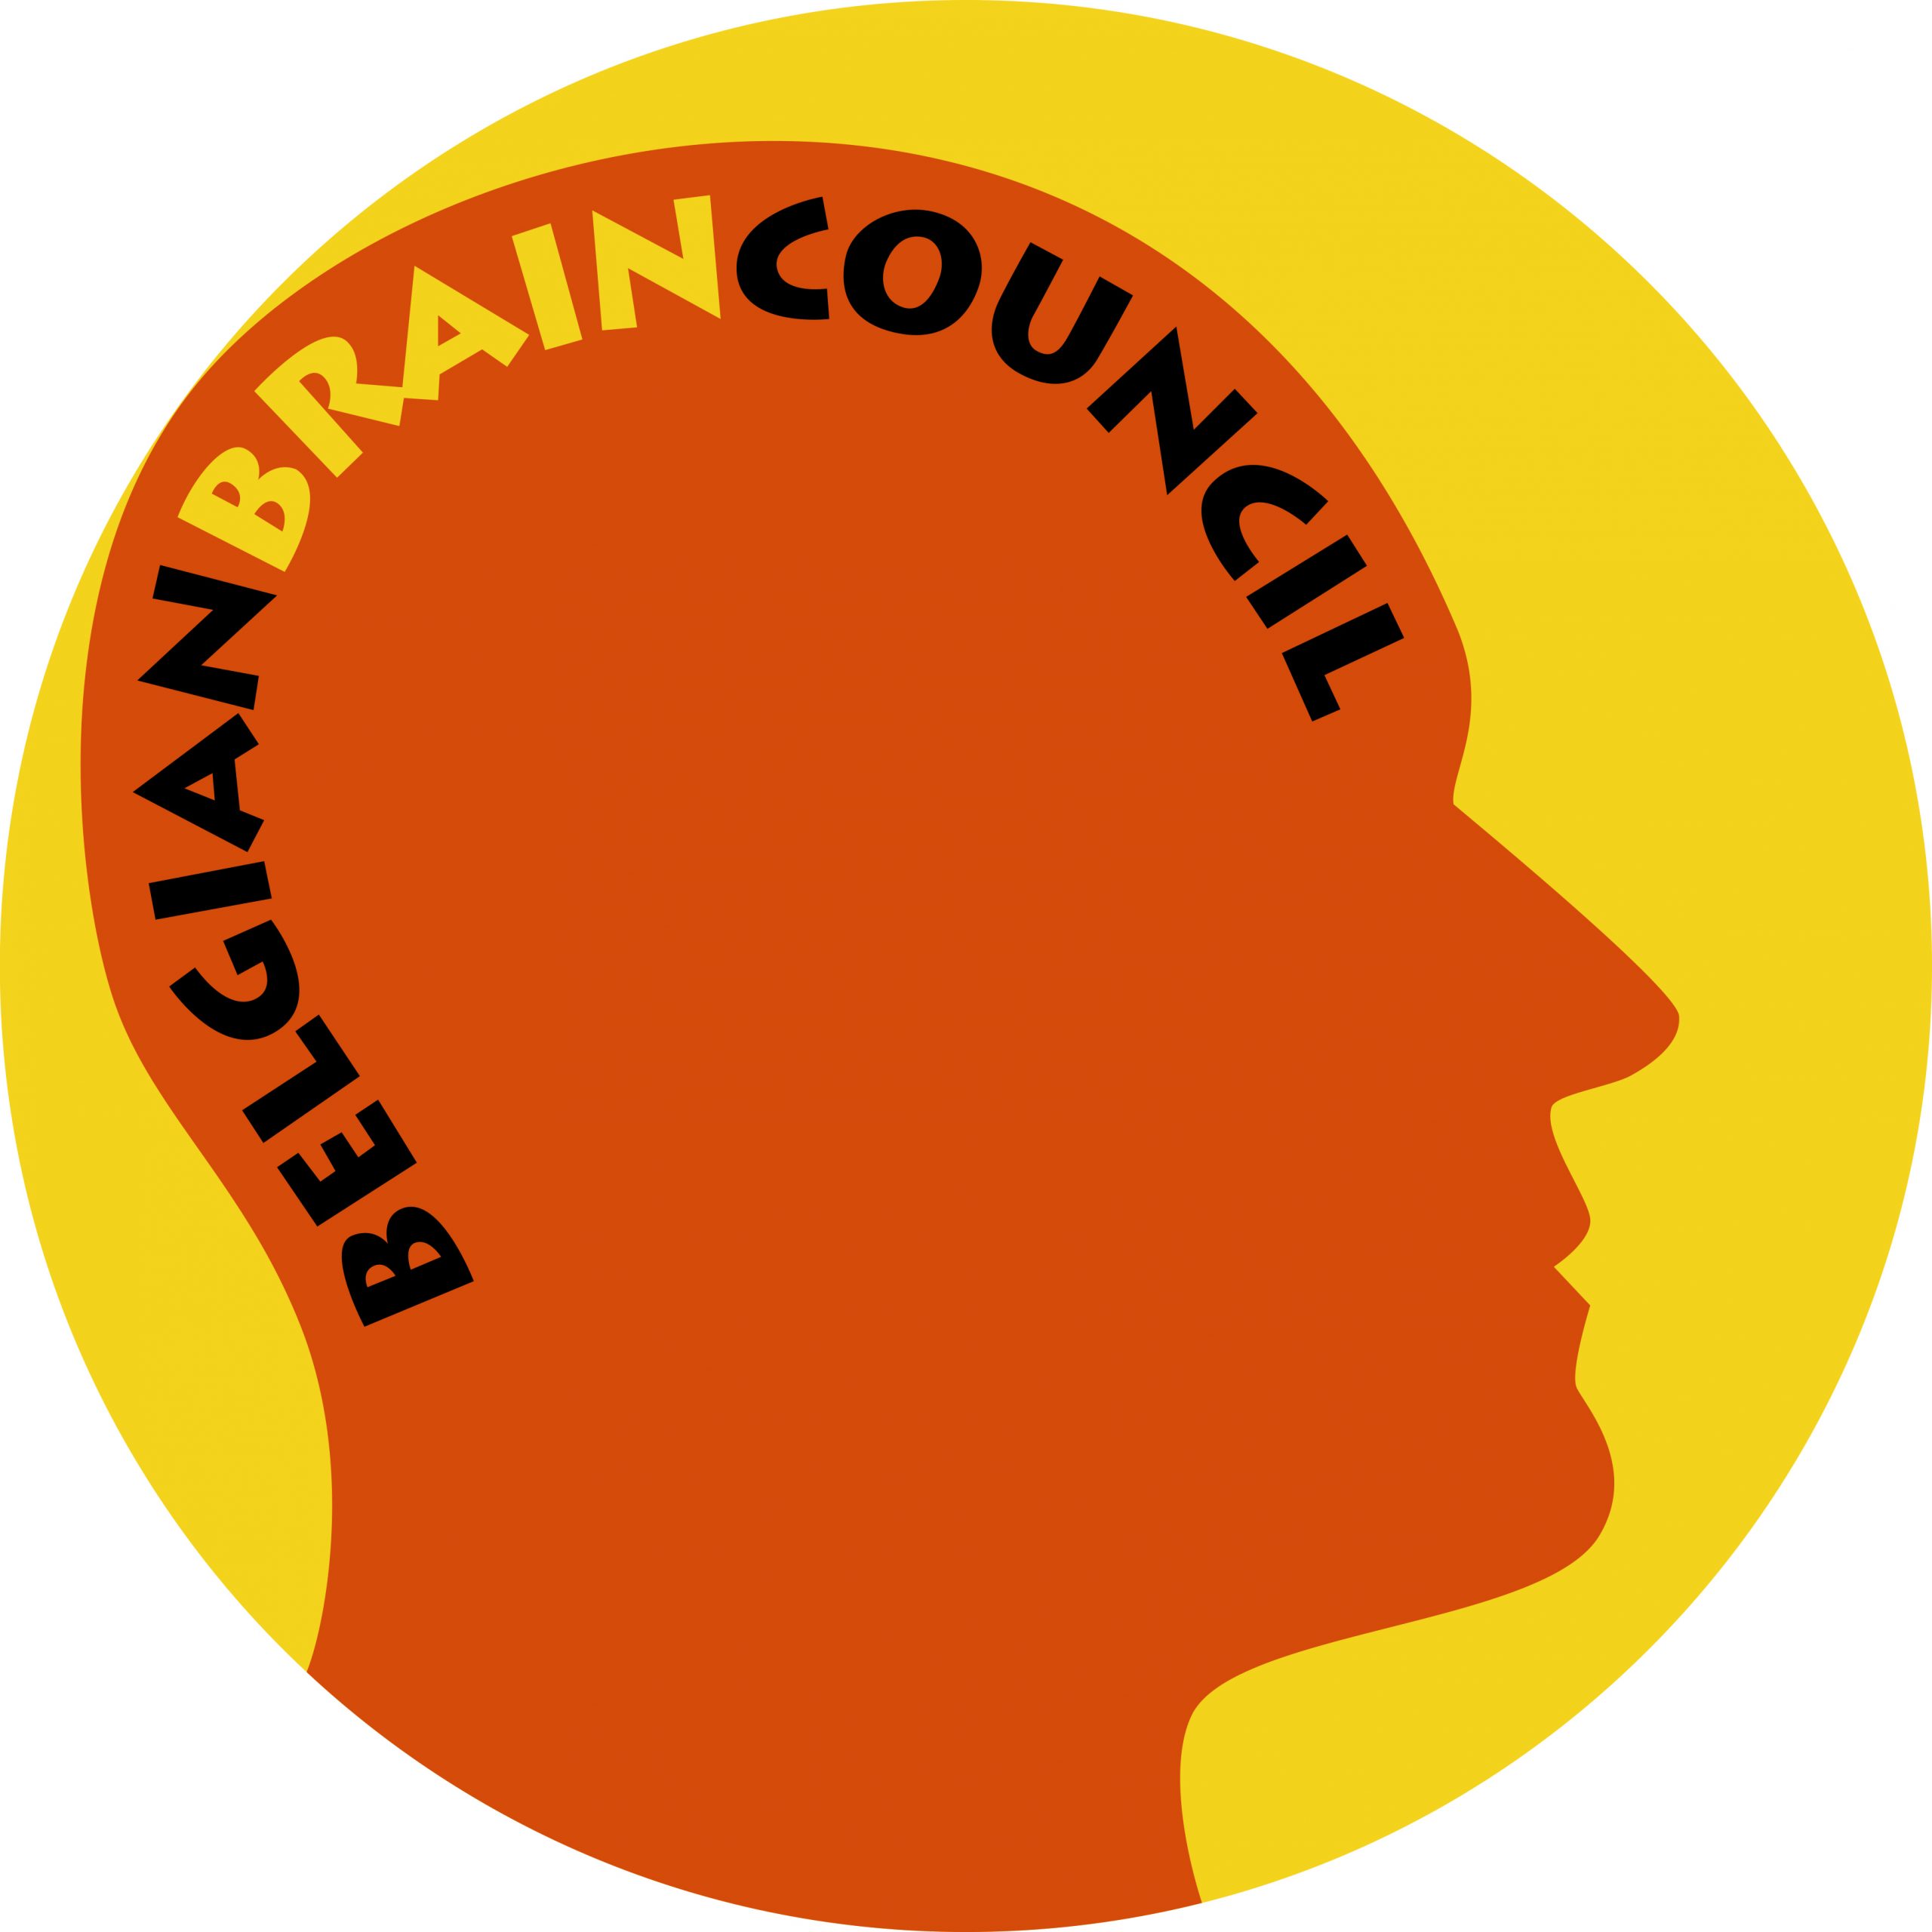 Belgian Brain Council